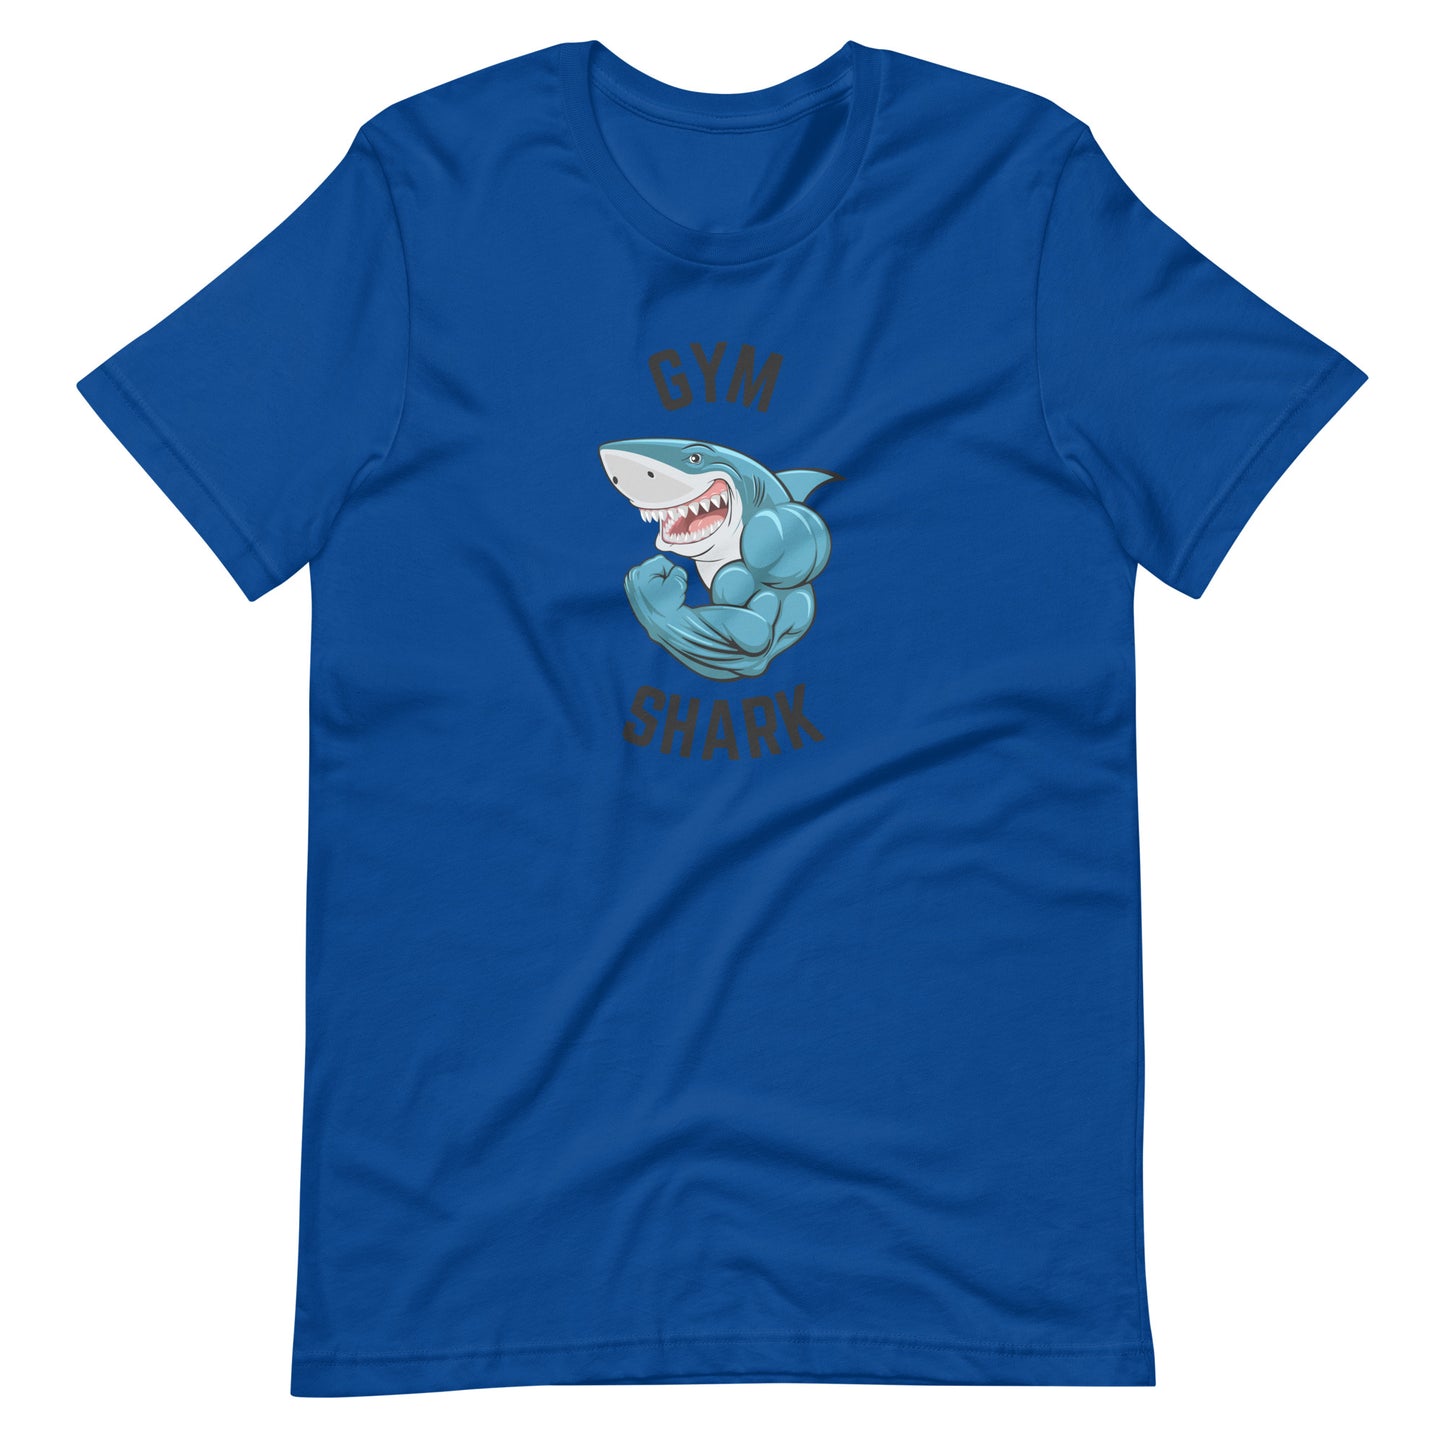 "Gym Shark" Unisex T-Shirt